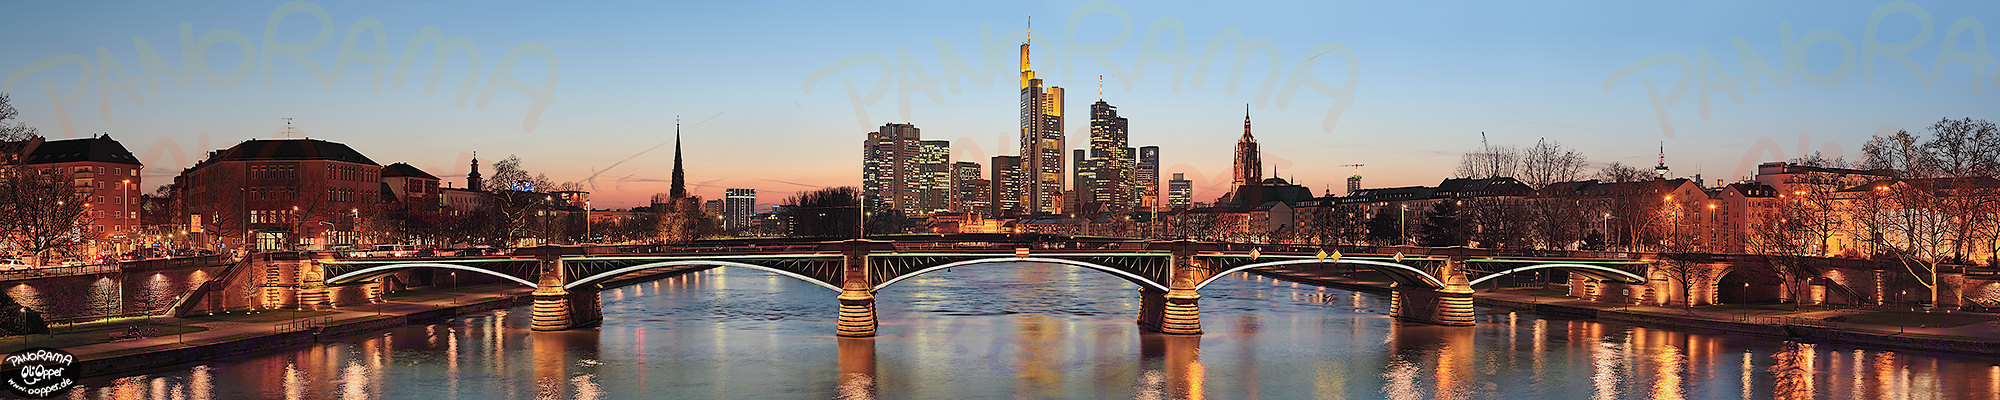 Skyline - Frankfurt - p161 - (c) by Oliver Opper